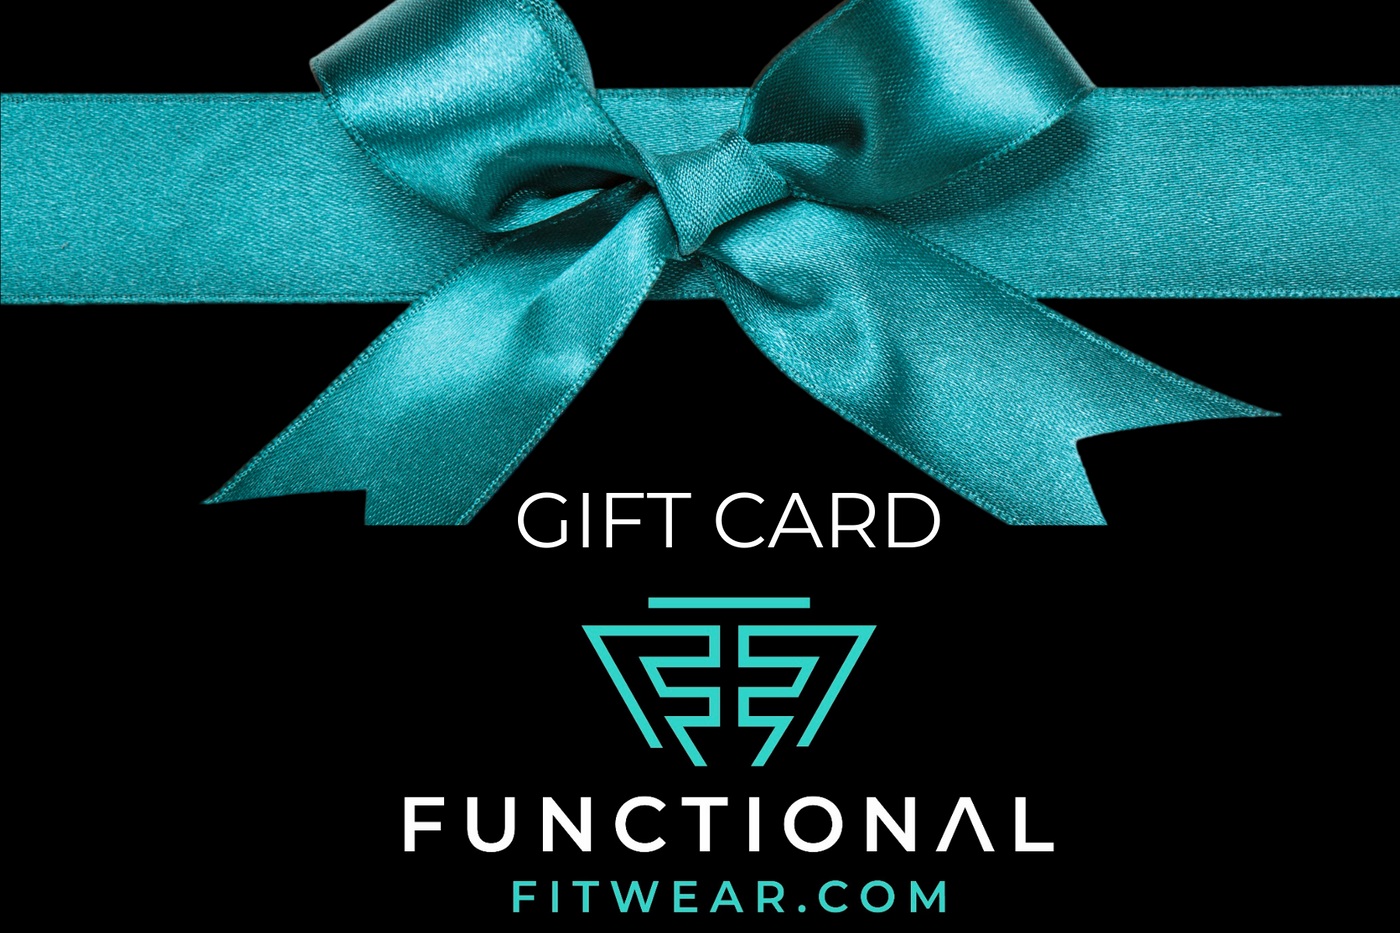 Functionalfitwear.com Gift Card